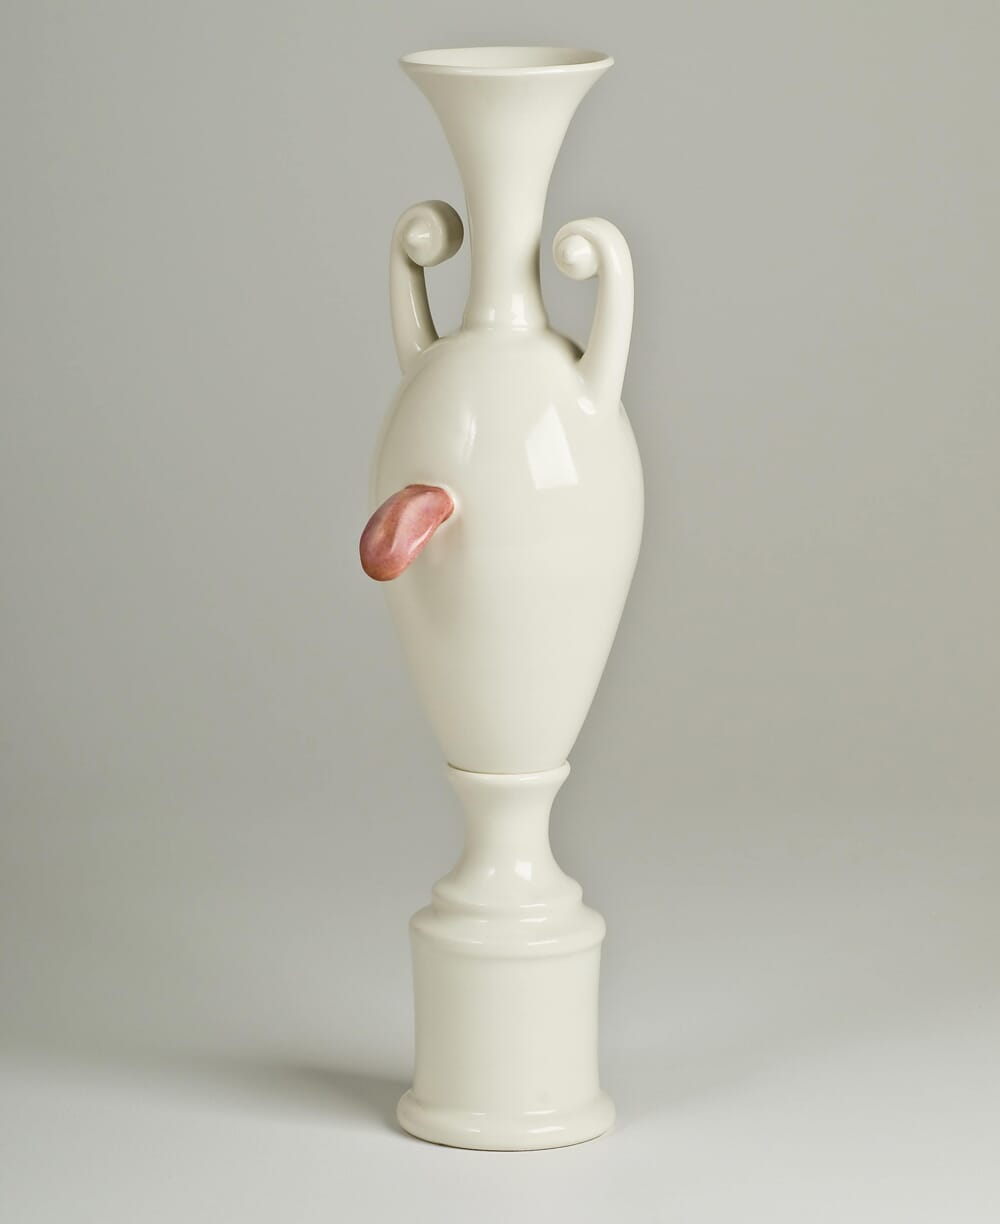 laurent-craste-porcelain-art-02